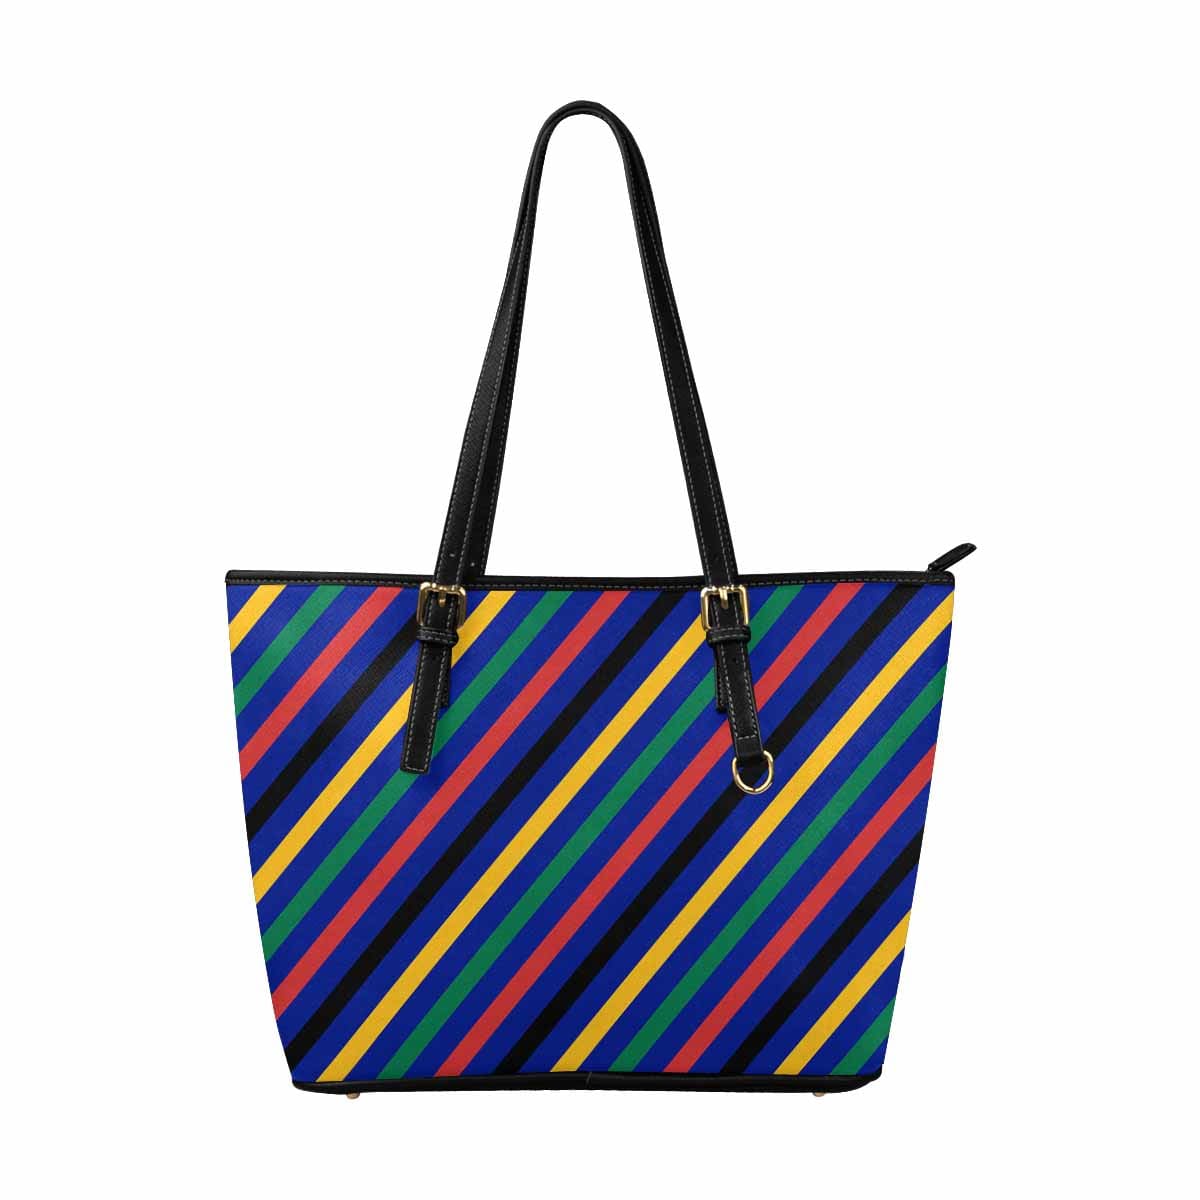 Large Leather Tote Shoulder Bag - Bohemian Multicolor Illustration - Bags